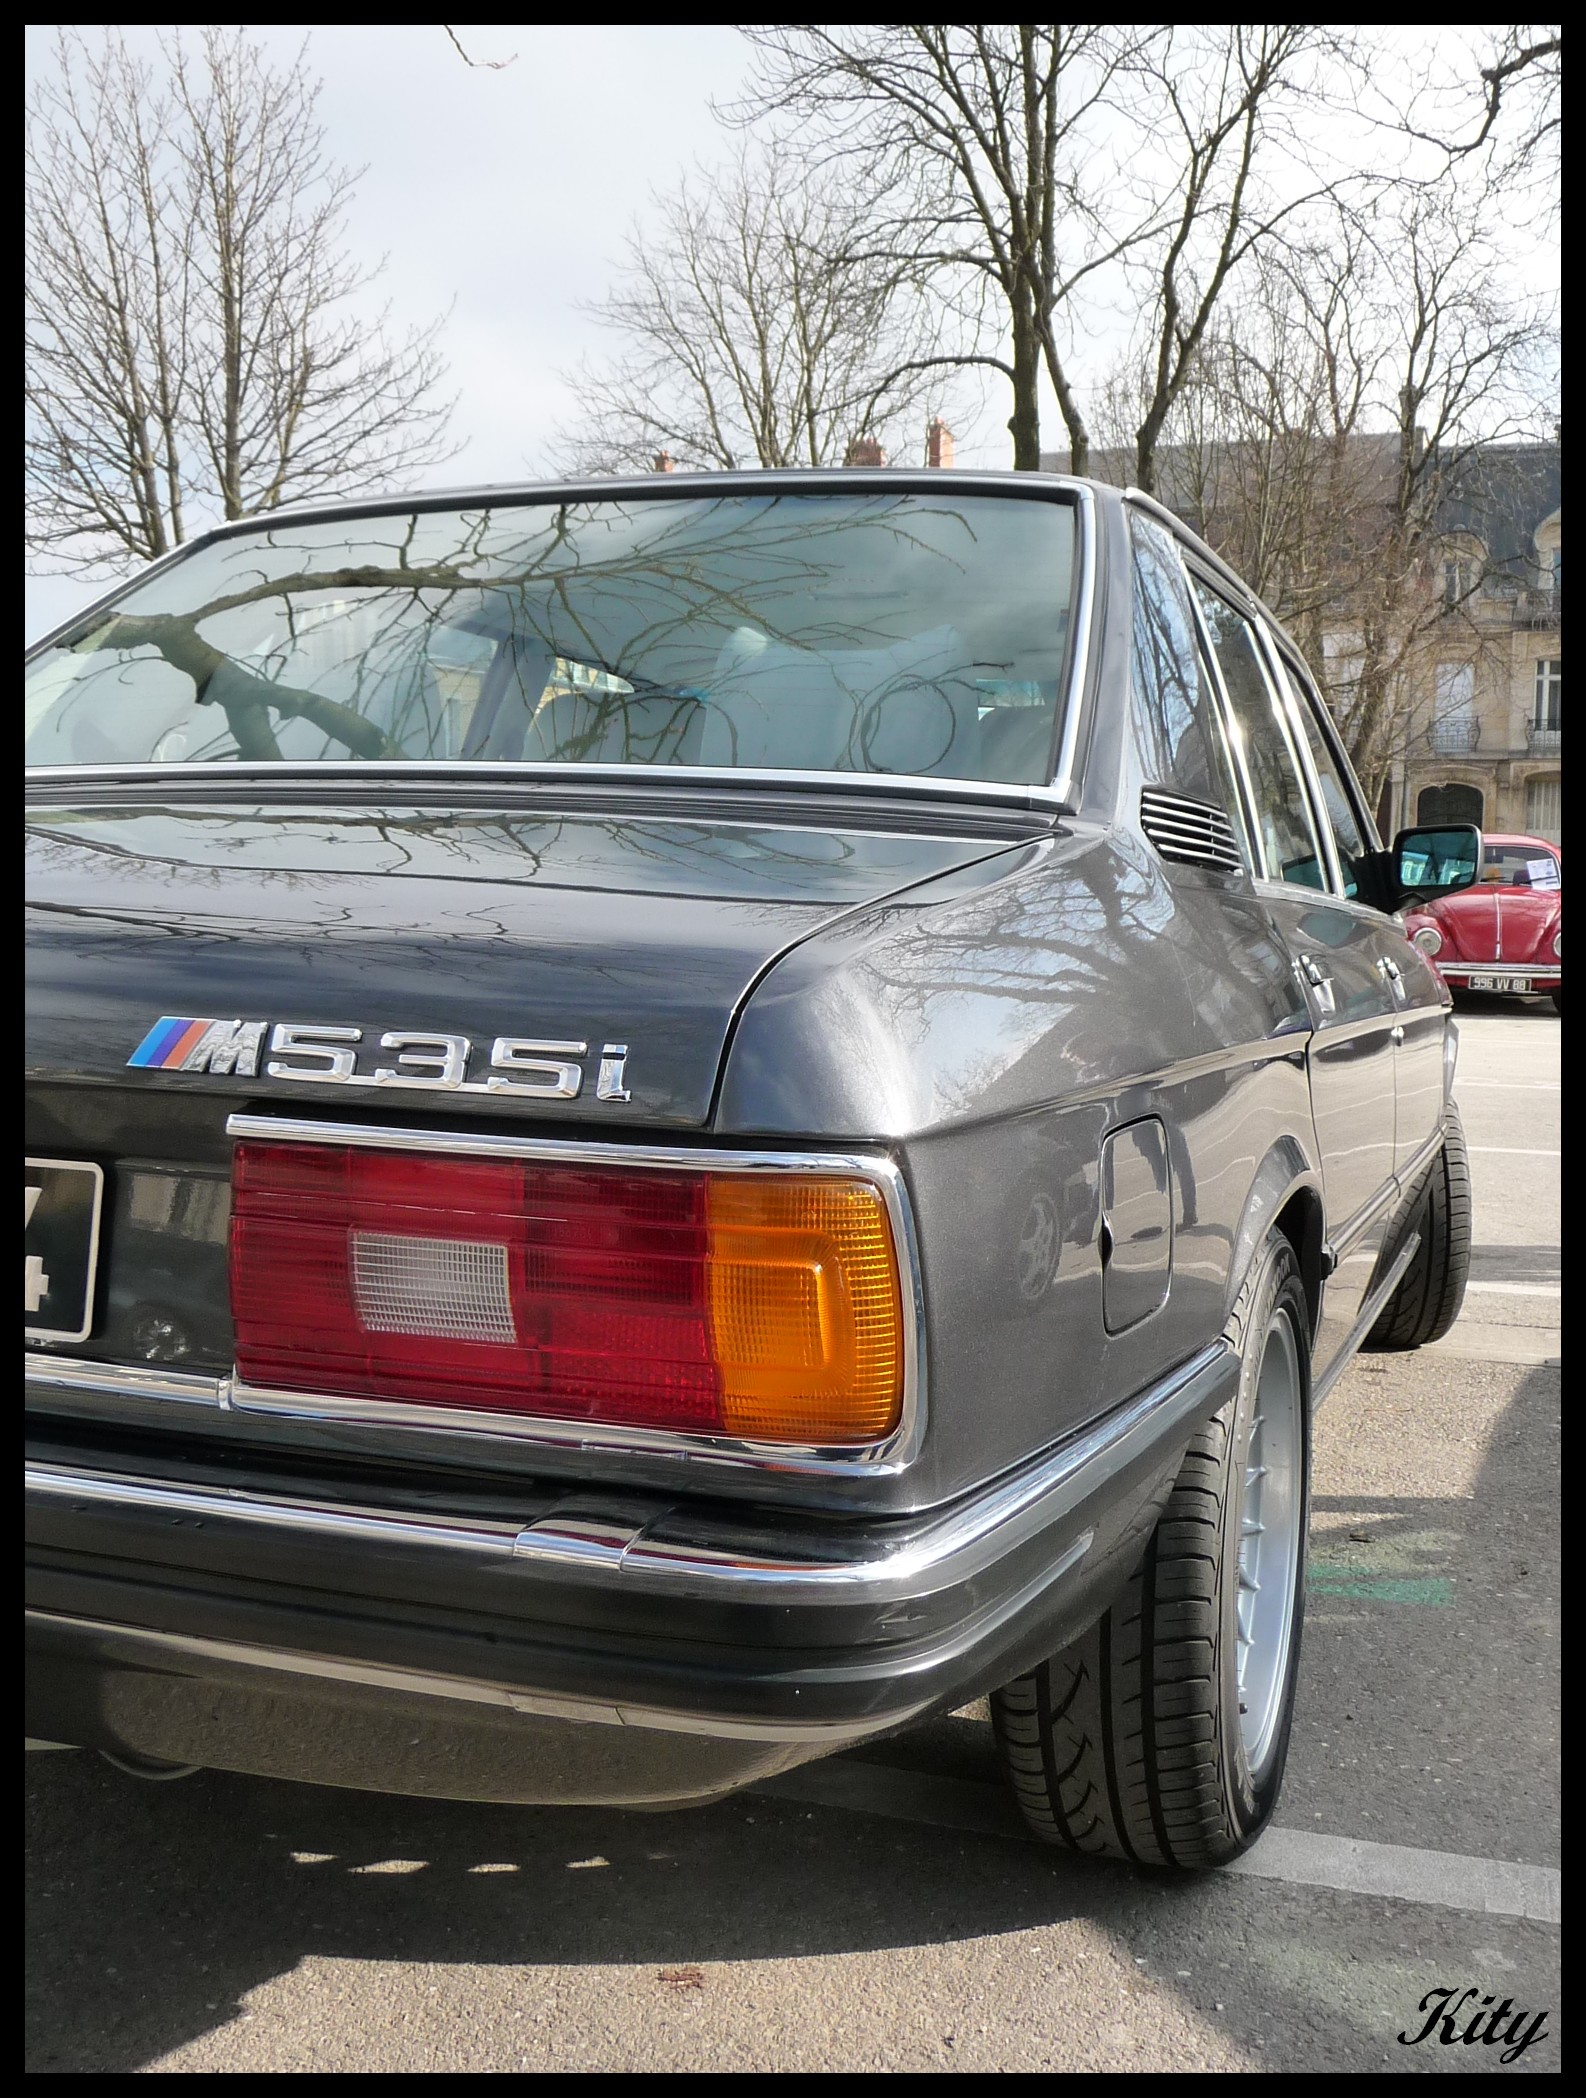 BMW M535i e12 de 1981 | Flickr - Photo Sharing!